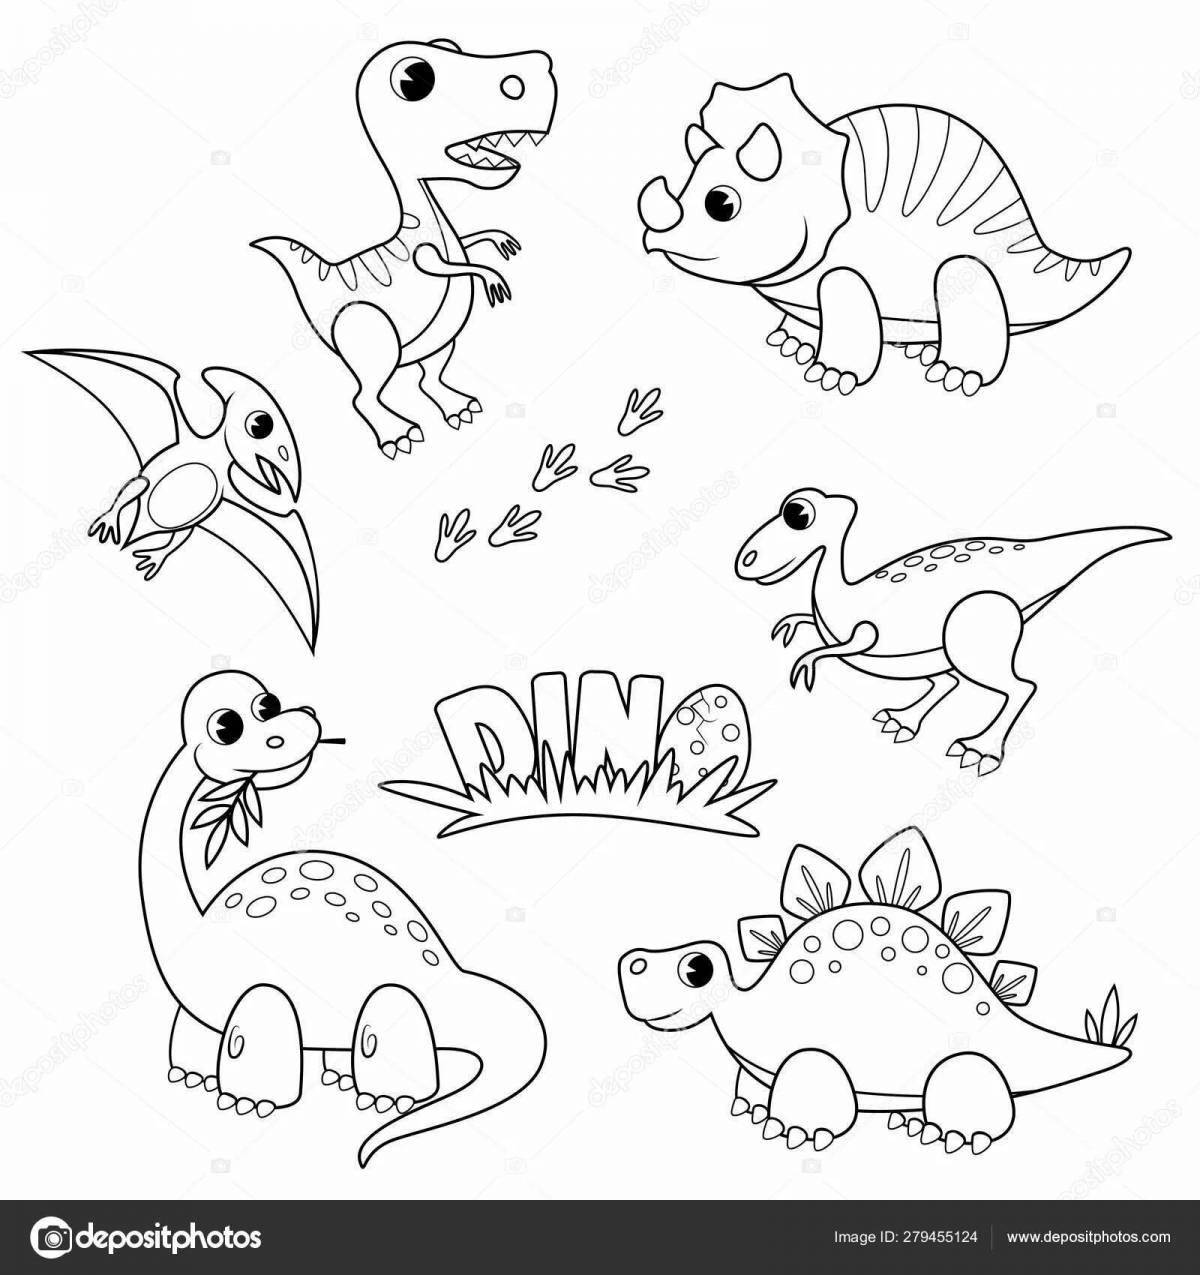 Sweet cute dinosaur coloring book